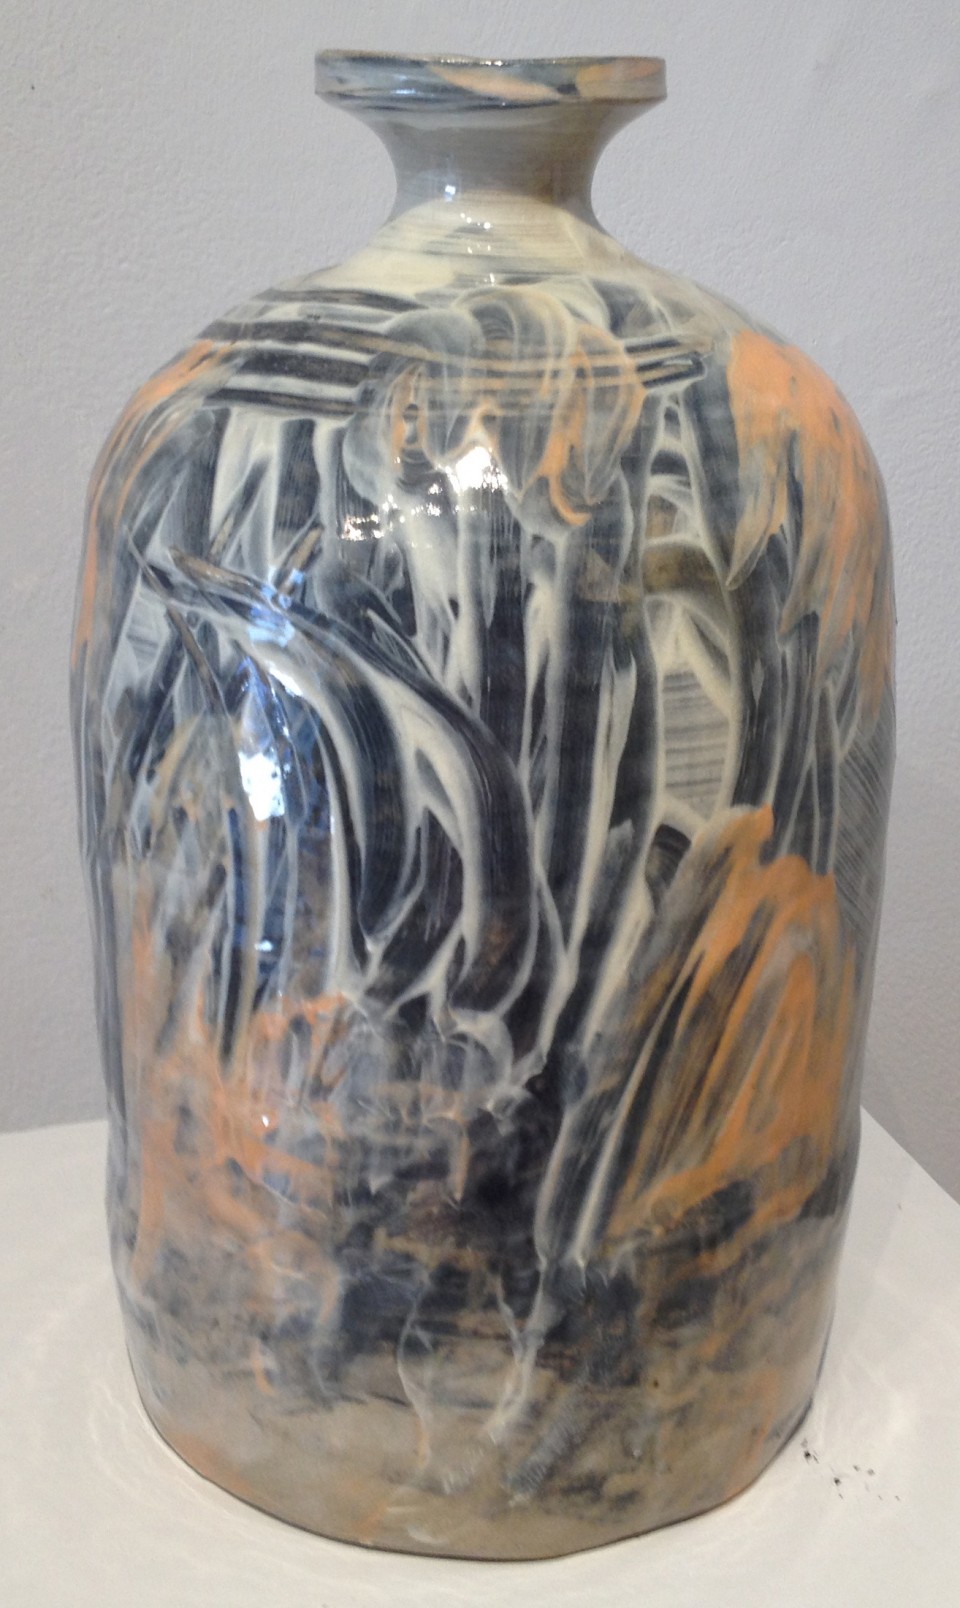 In-Chin Lee, Large Multi-Glaze Jar, porcelain, 13 x 7.5 x 7